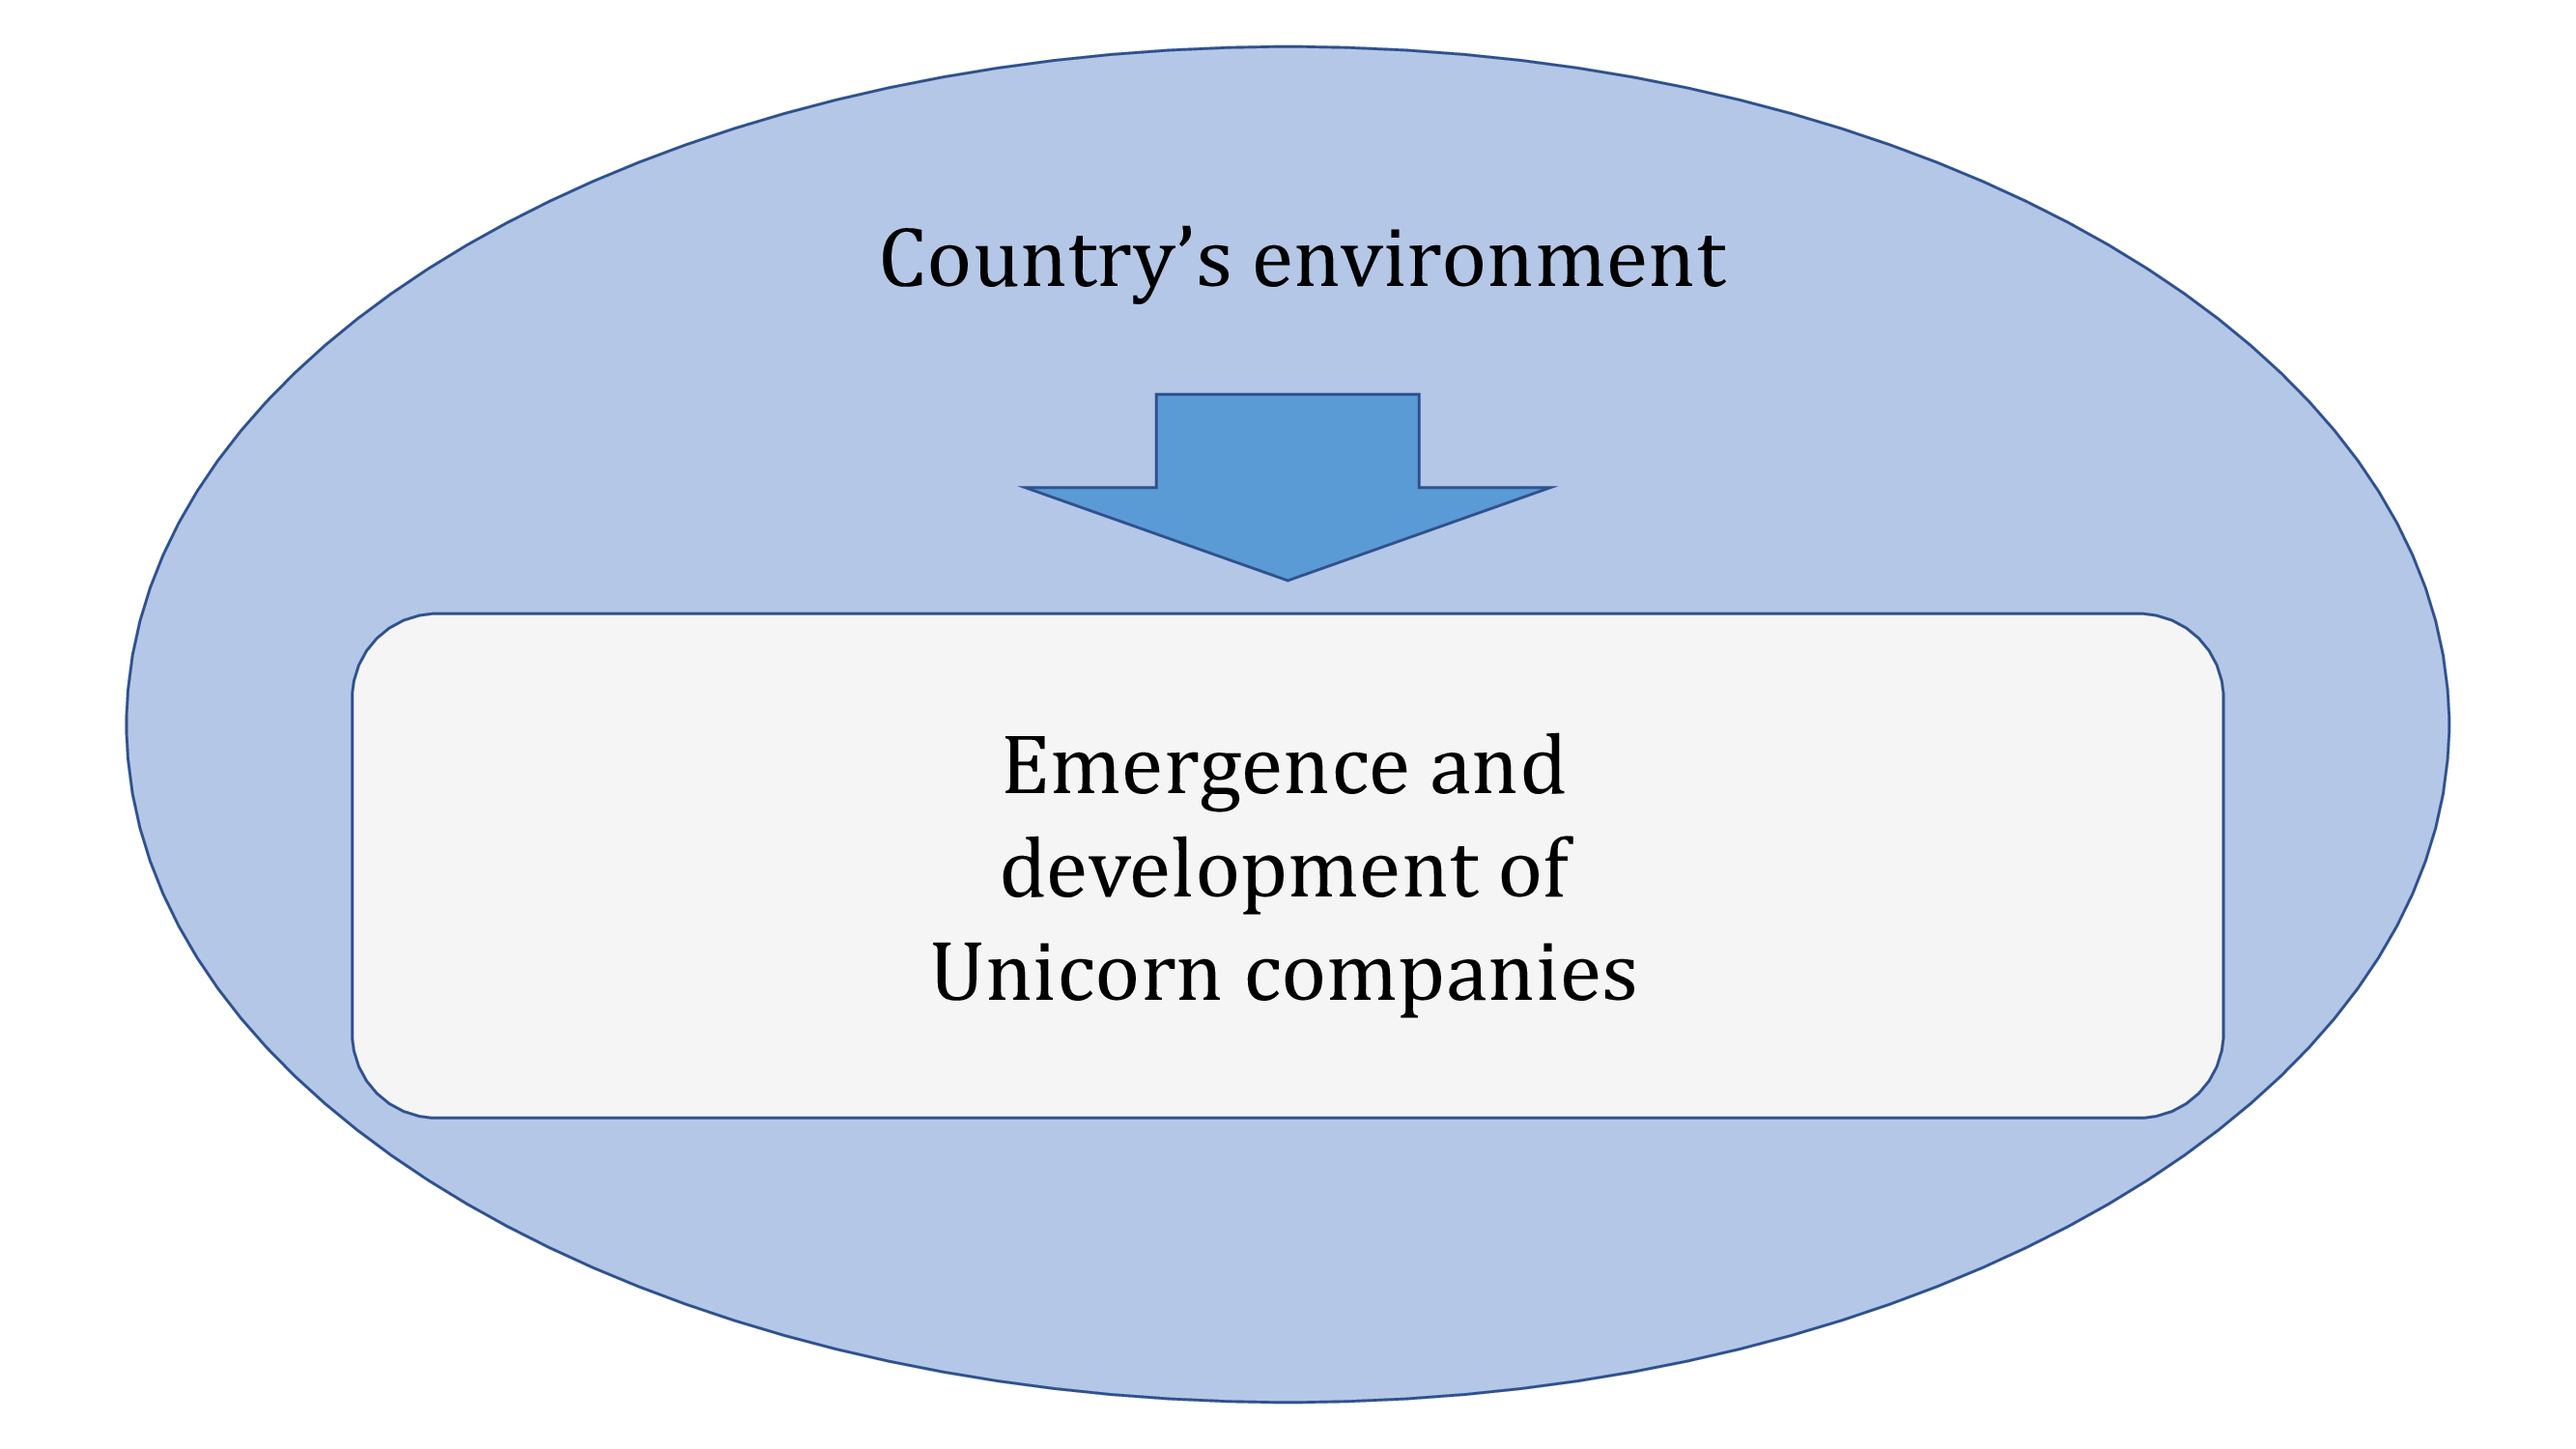 Index terms: Country’s environment; Entrepreneurship; Start-ups; Unicorn companies